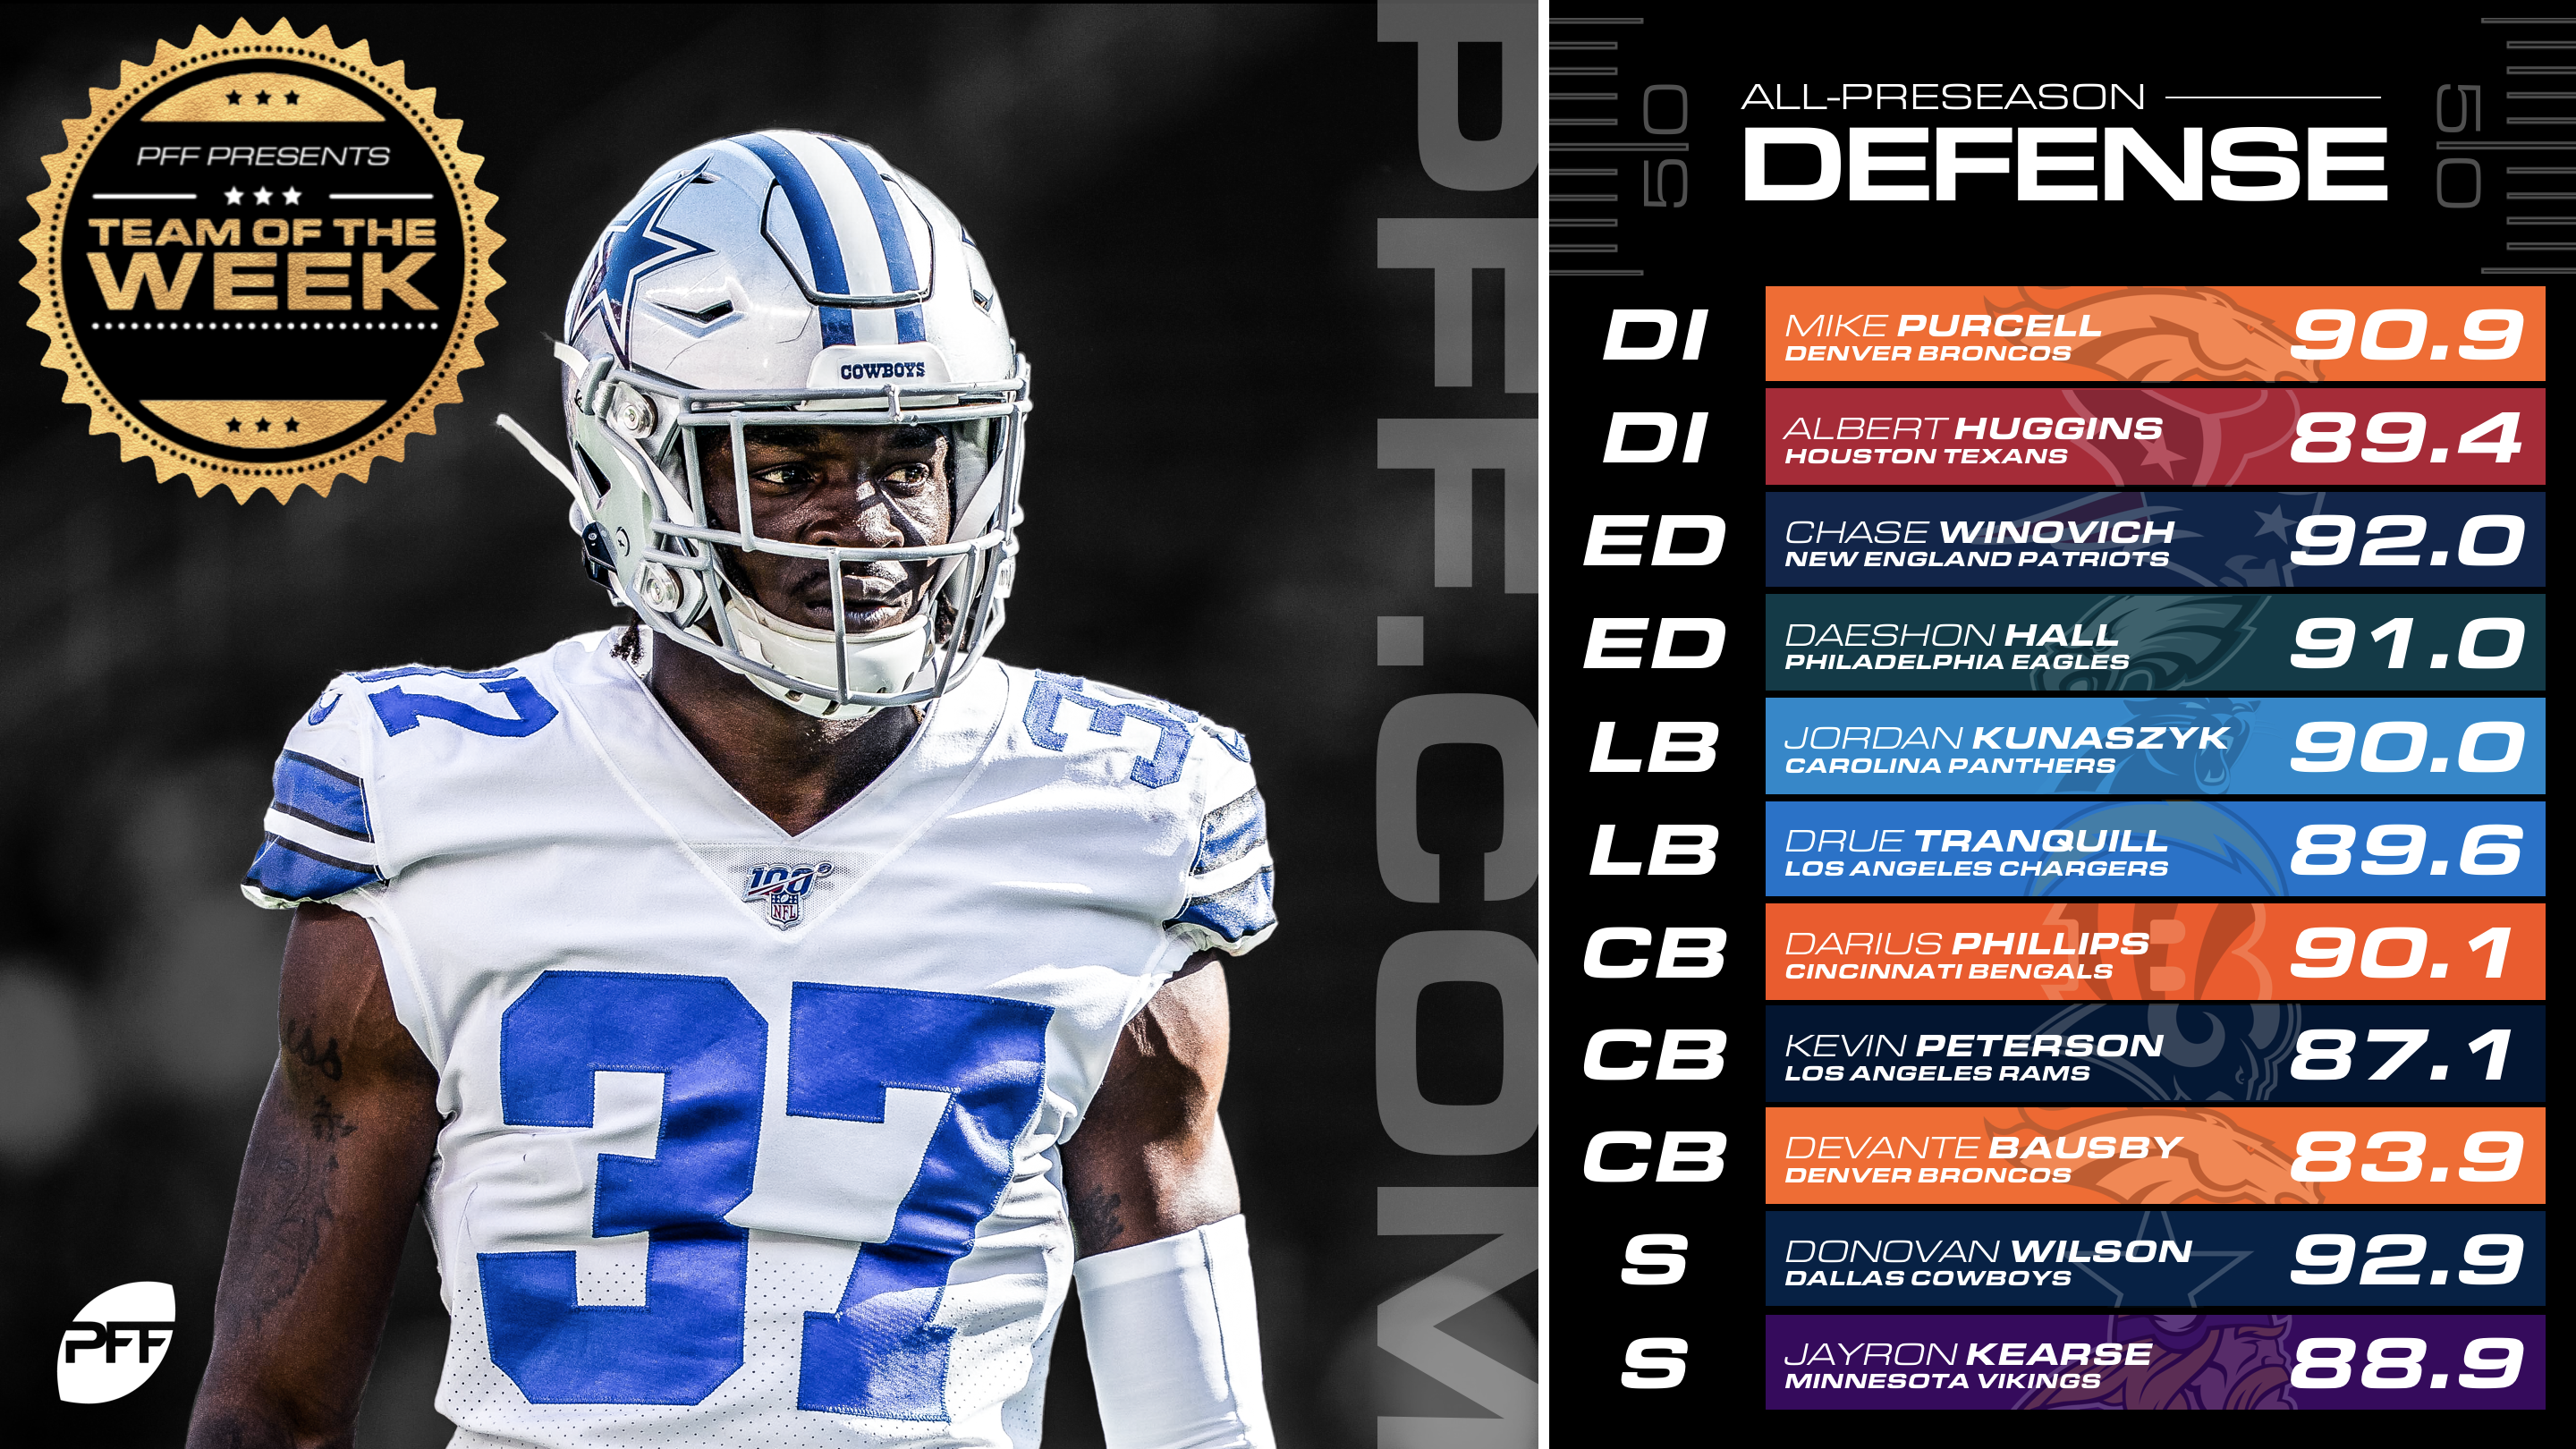 PFF ranks all 32 run defenses ahead of the 2019 NFL season